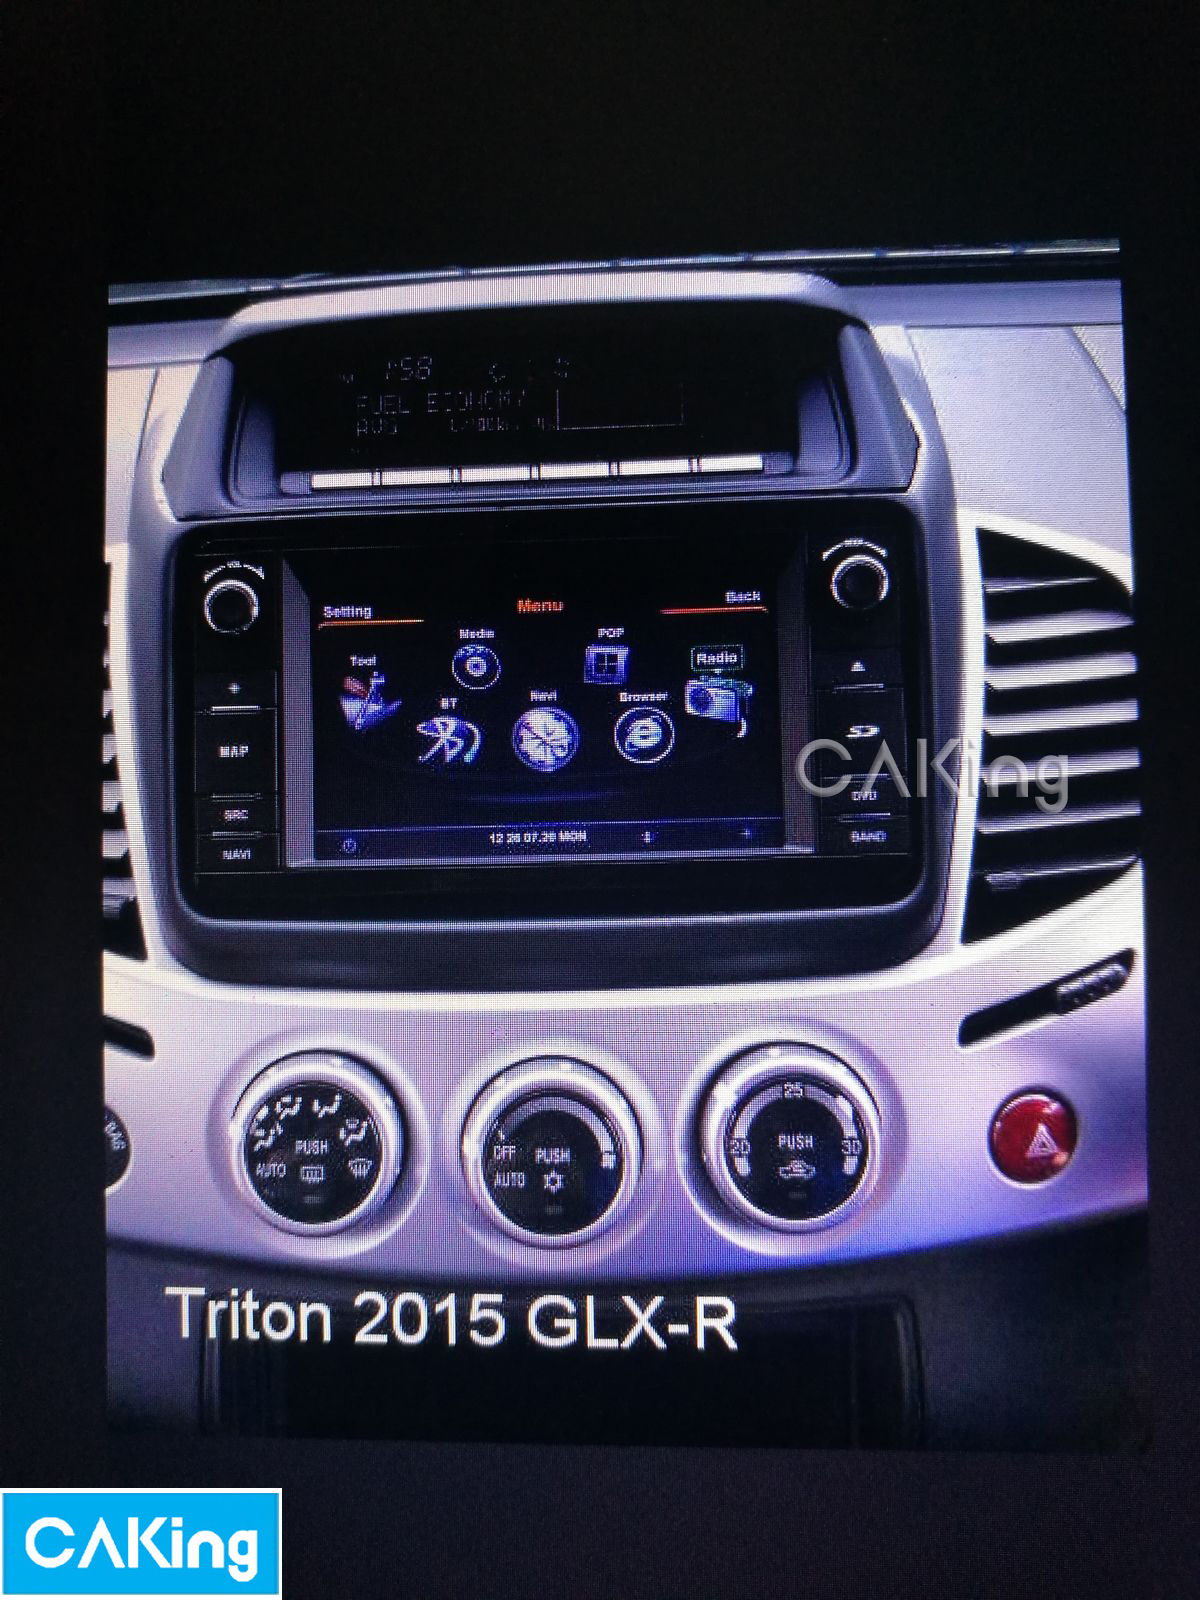 Radio diafragma doble DIN autoradio para mitsubishi l200 Sportero Strada trition 